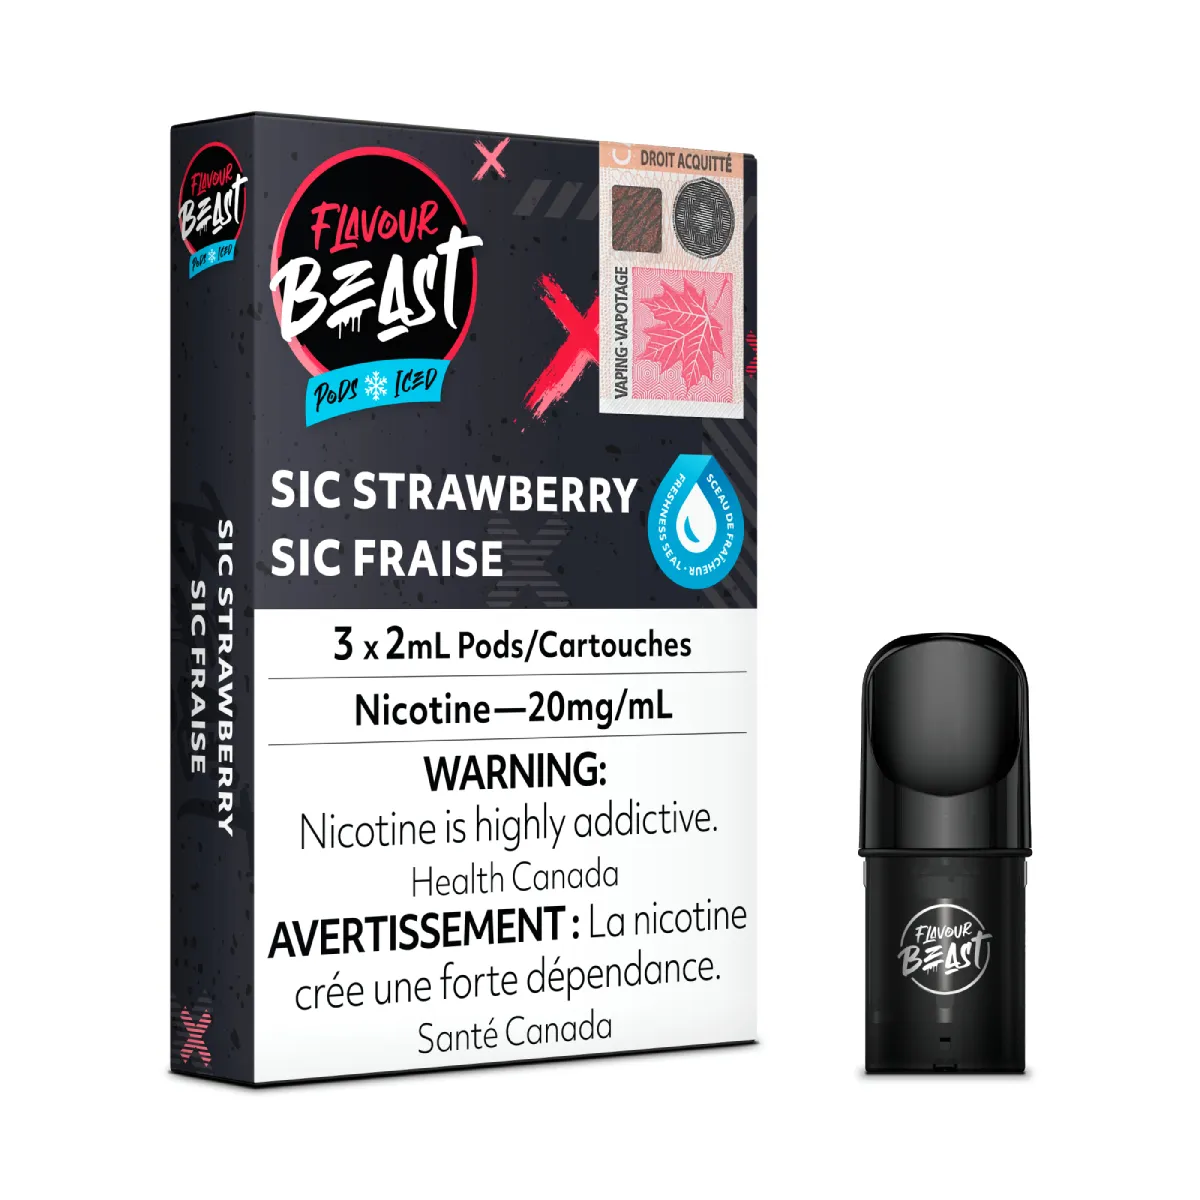 Flavour Beast Pods - Sic Strawberry Iced (3x2mL) (6757137612855)